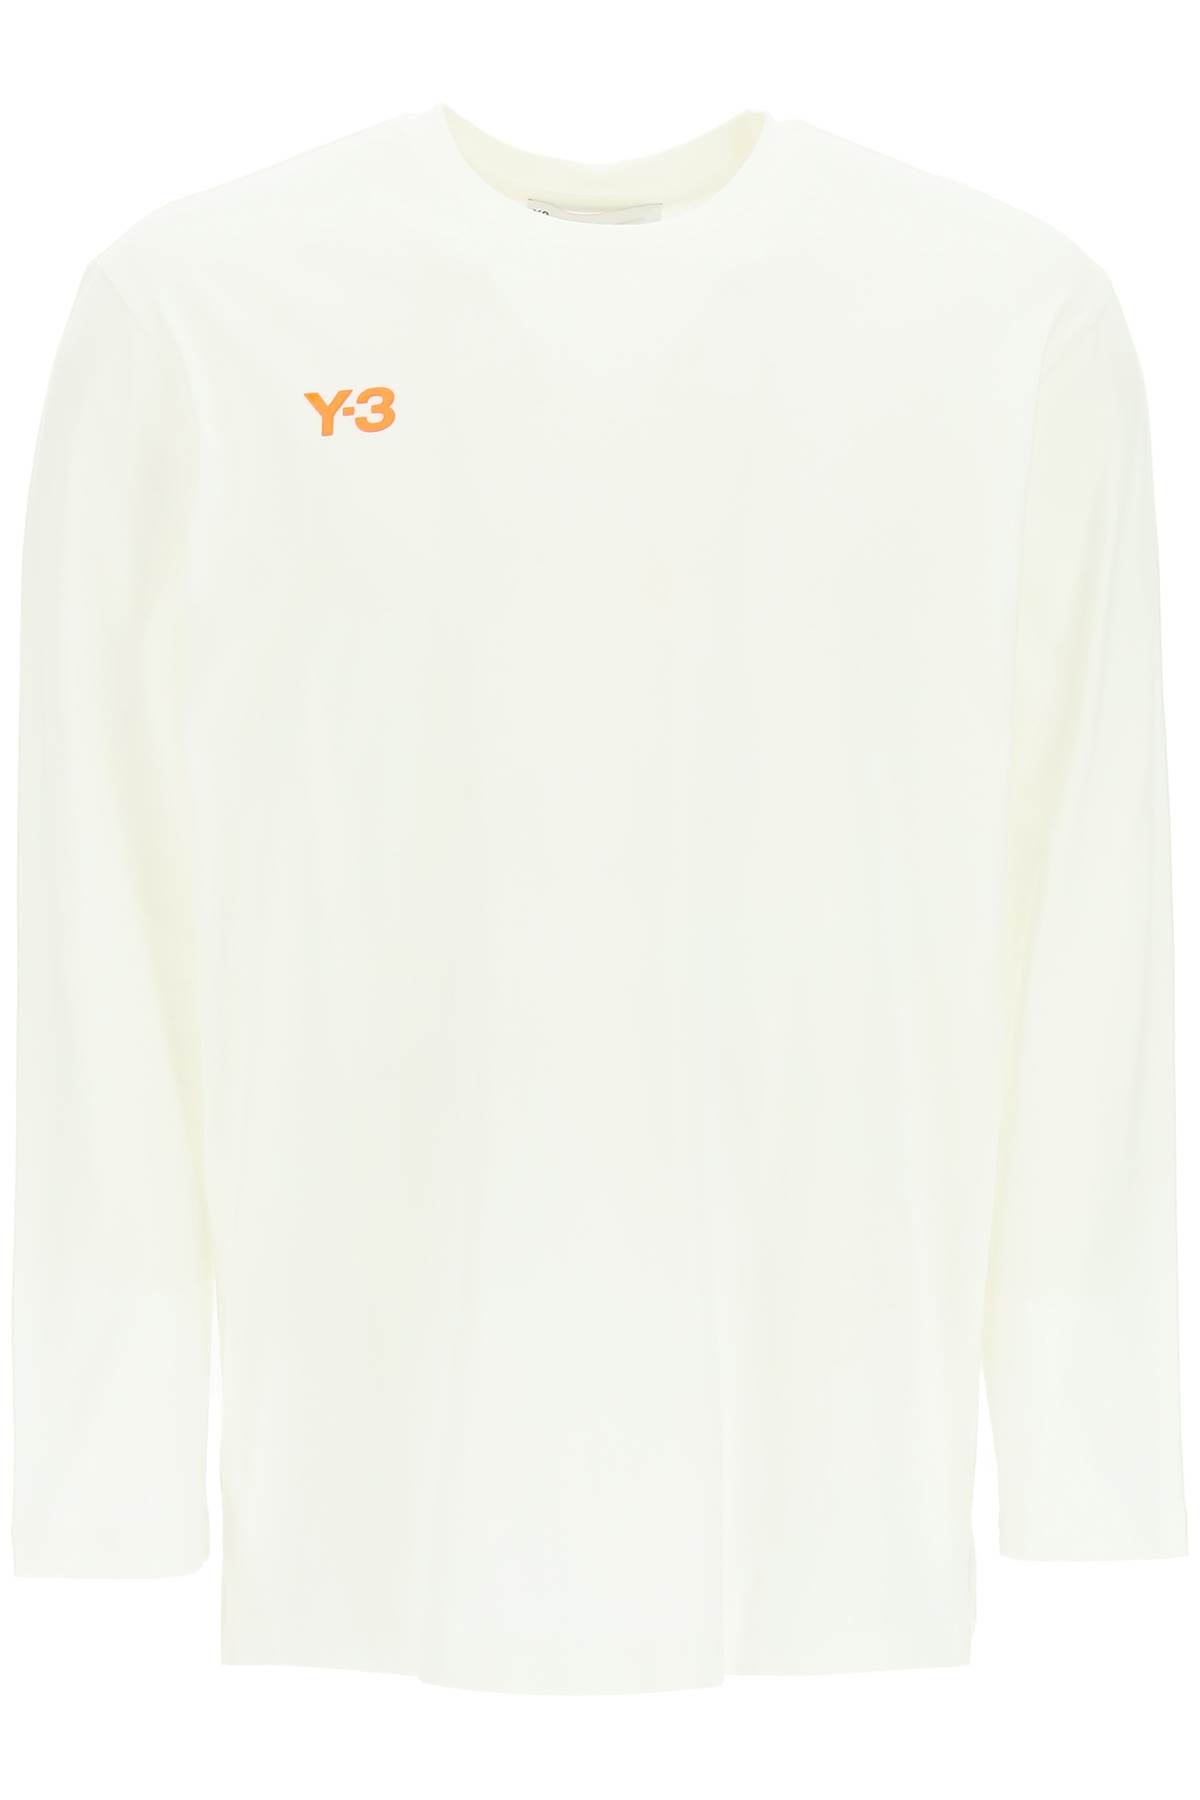 Y-3 Yohji Back Print T-shirt